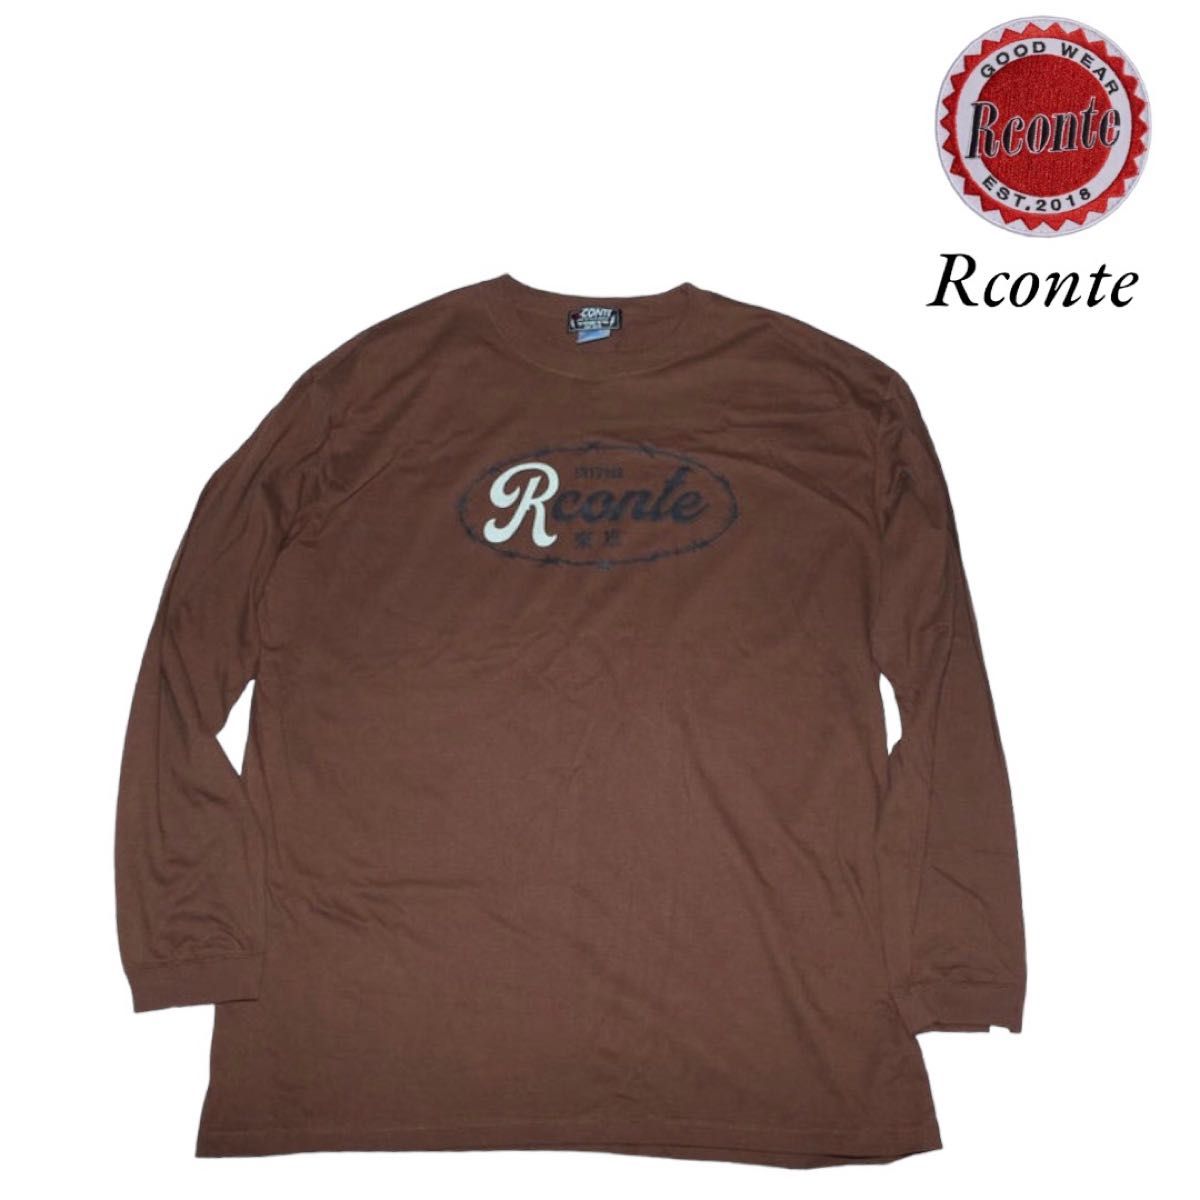 Rconte Original logo ロンT (アールカンテ)